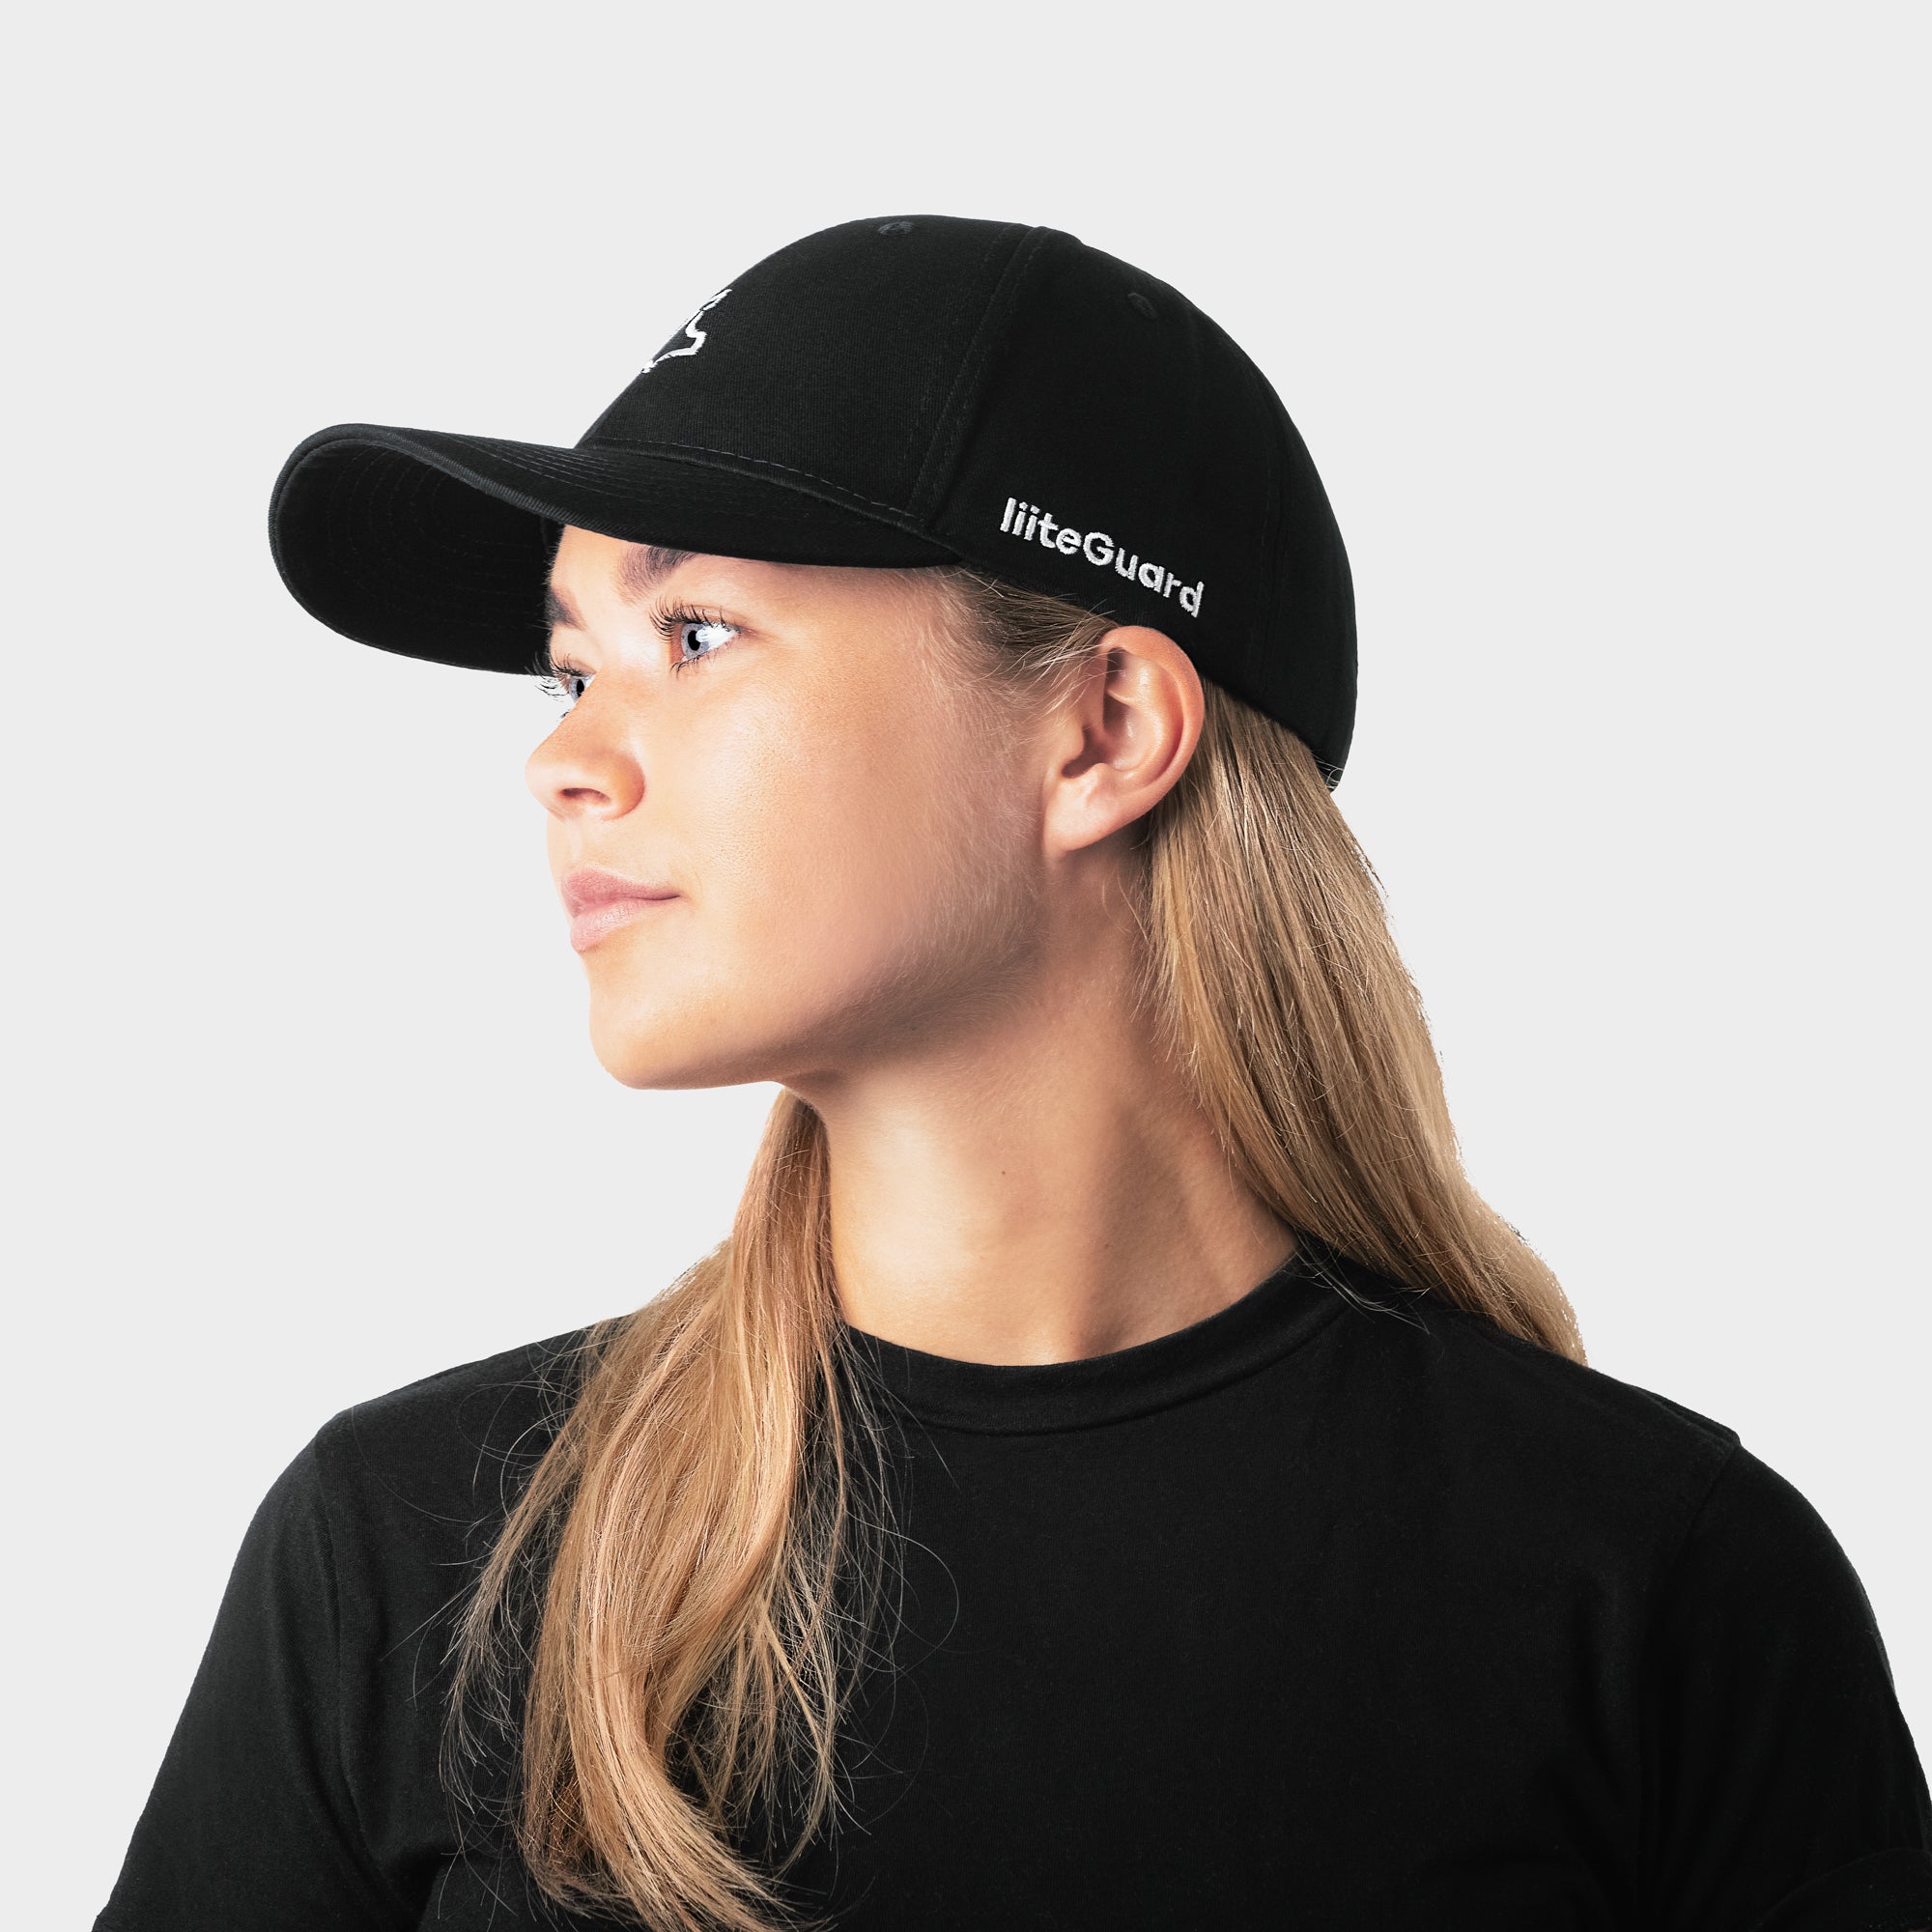 Liiteguard BASEBALL CAP Caps BLACK